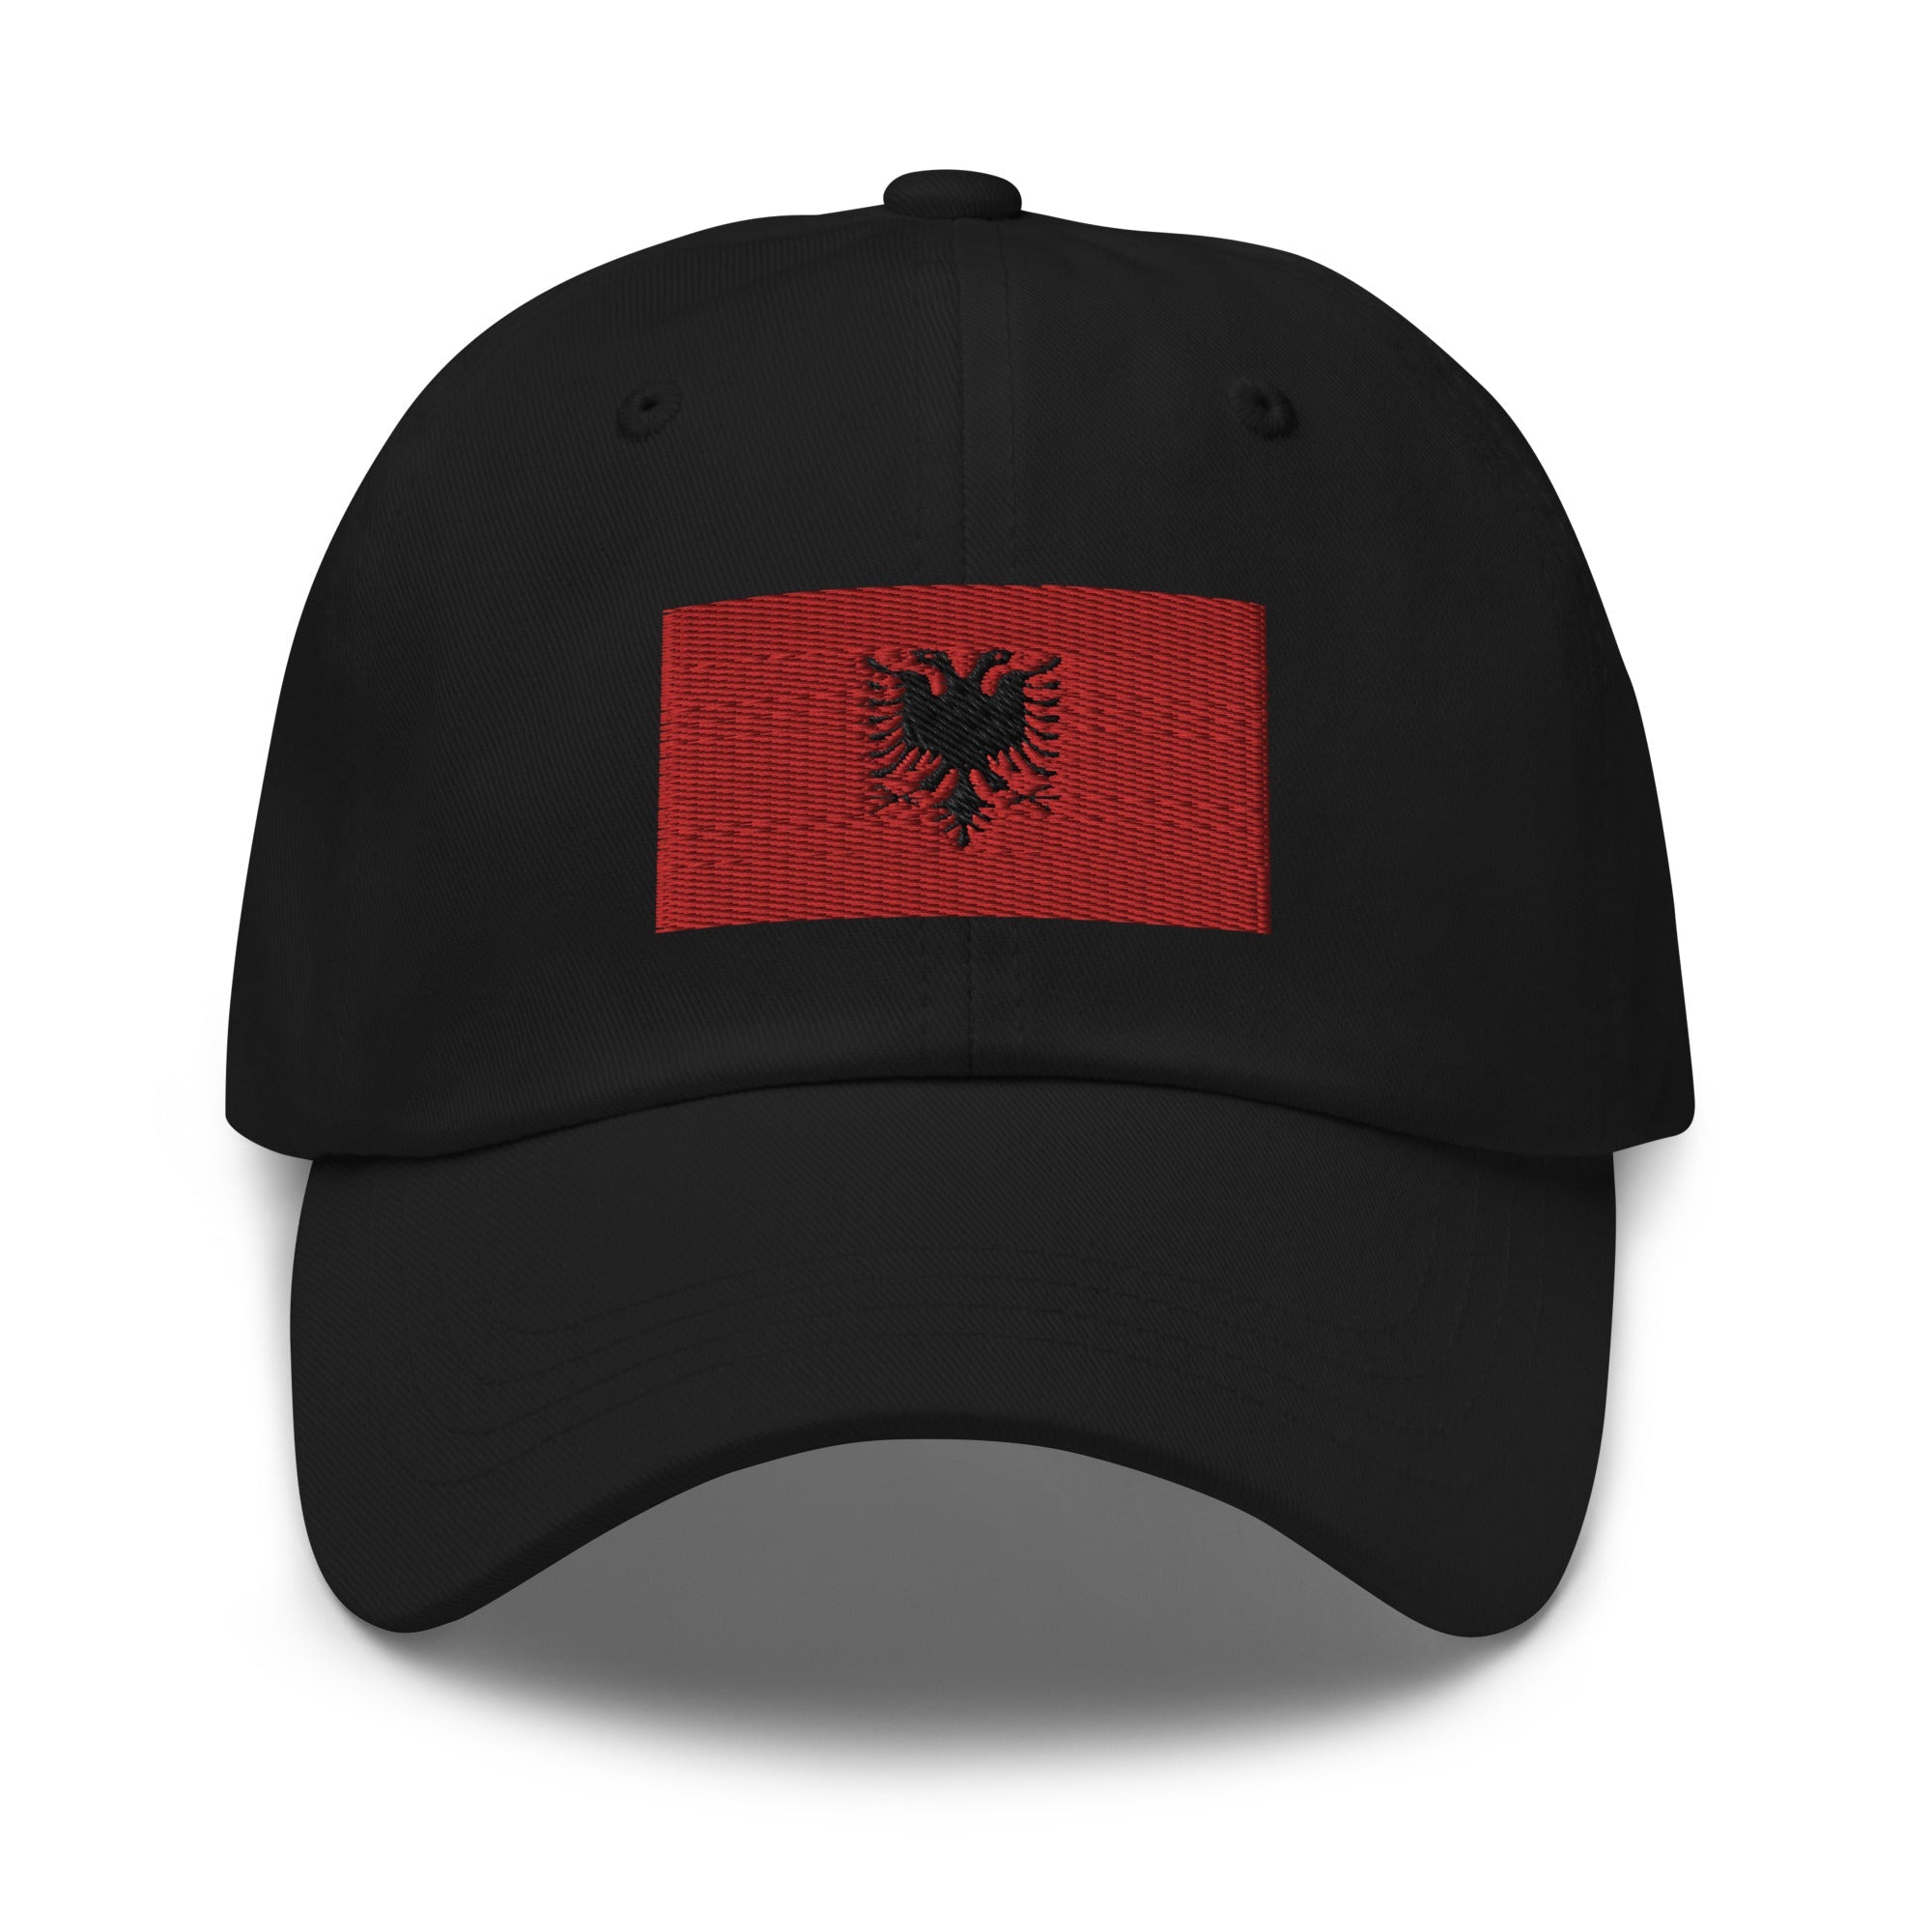 Albania Flag Cap - Adjustable Embroidered Dad Hat